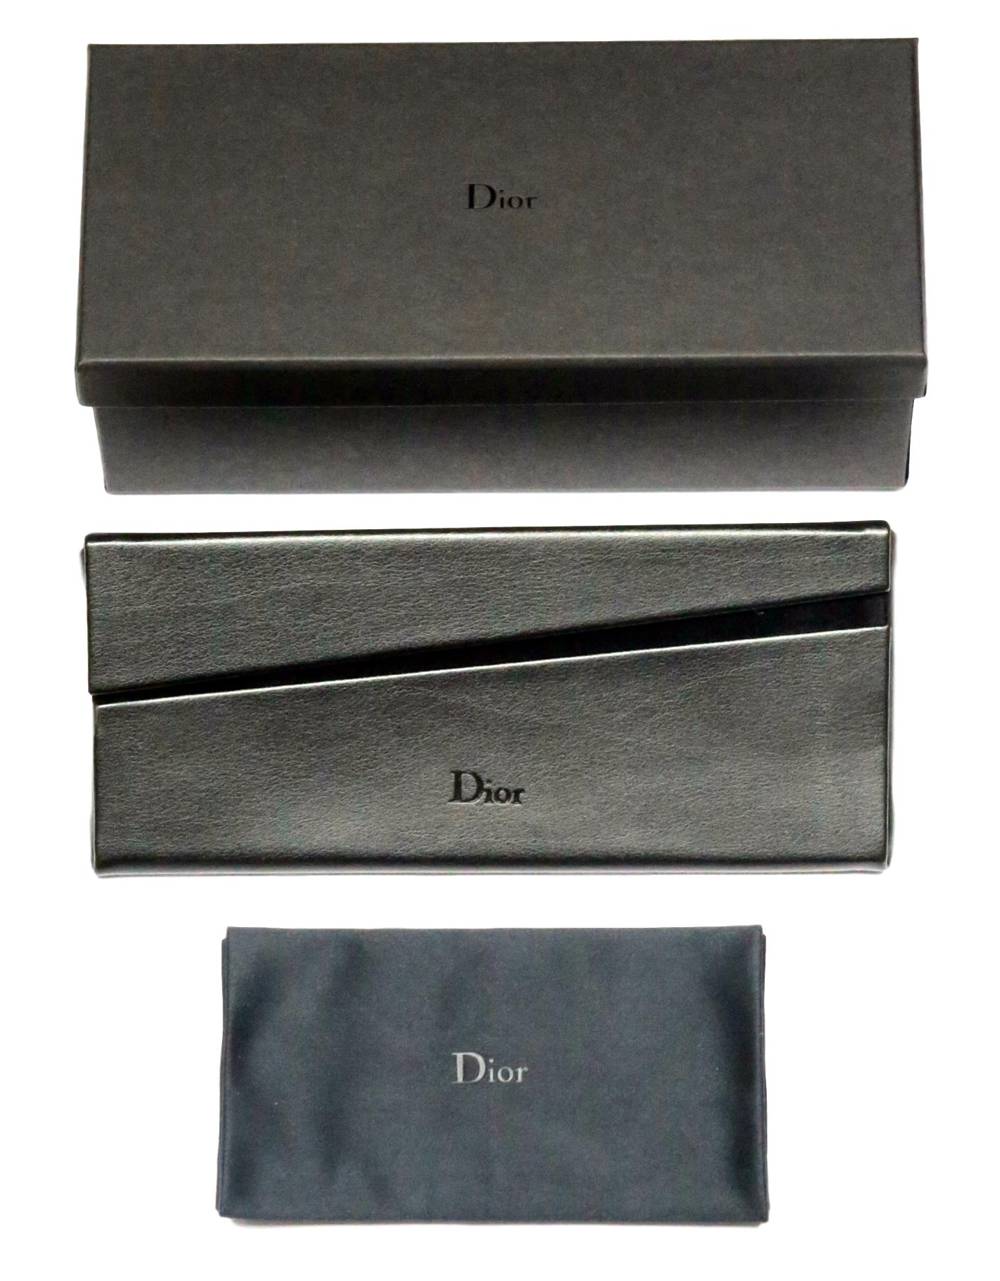 Dior Eyewear Case